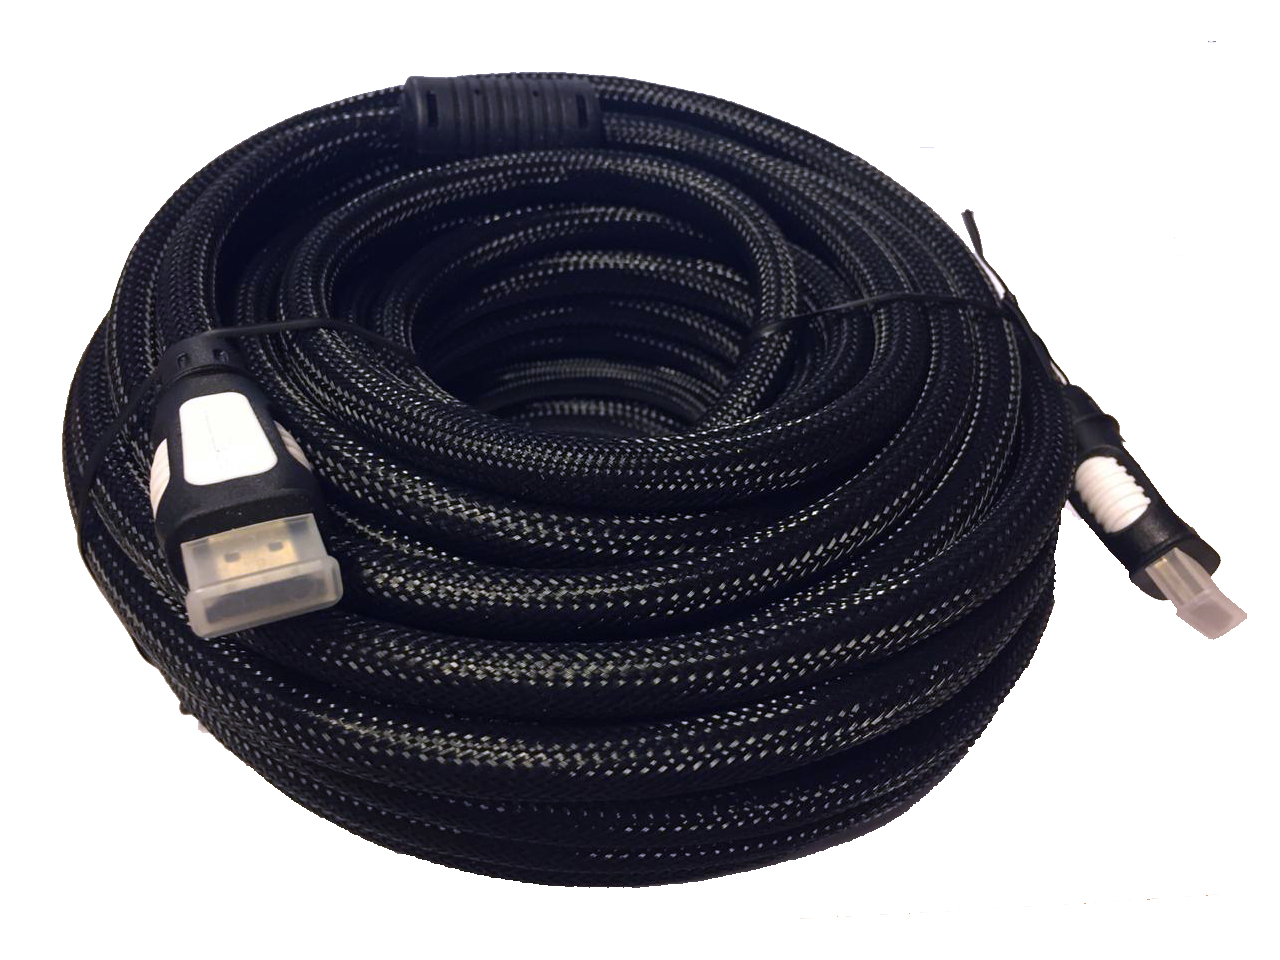 Cable Hdmi a Hdmi 4K V2.0 - SKYWAY - Largo 5 Mts Modelo: CABLE-HDMI-2.0-5M